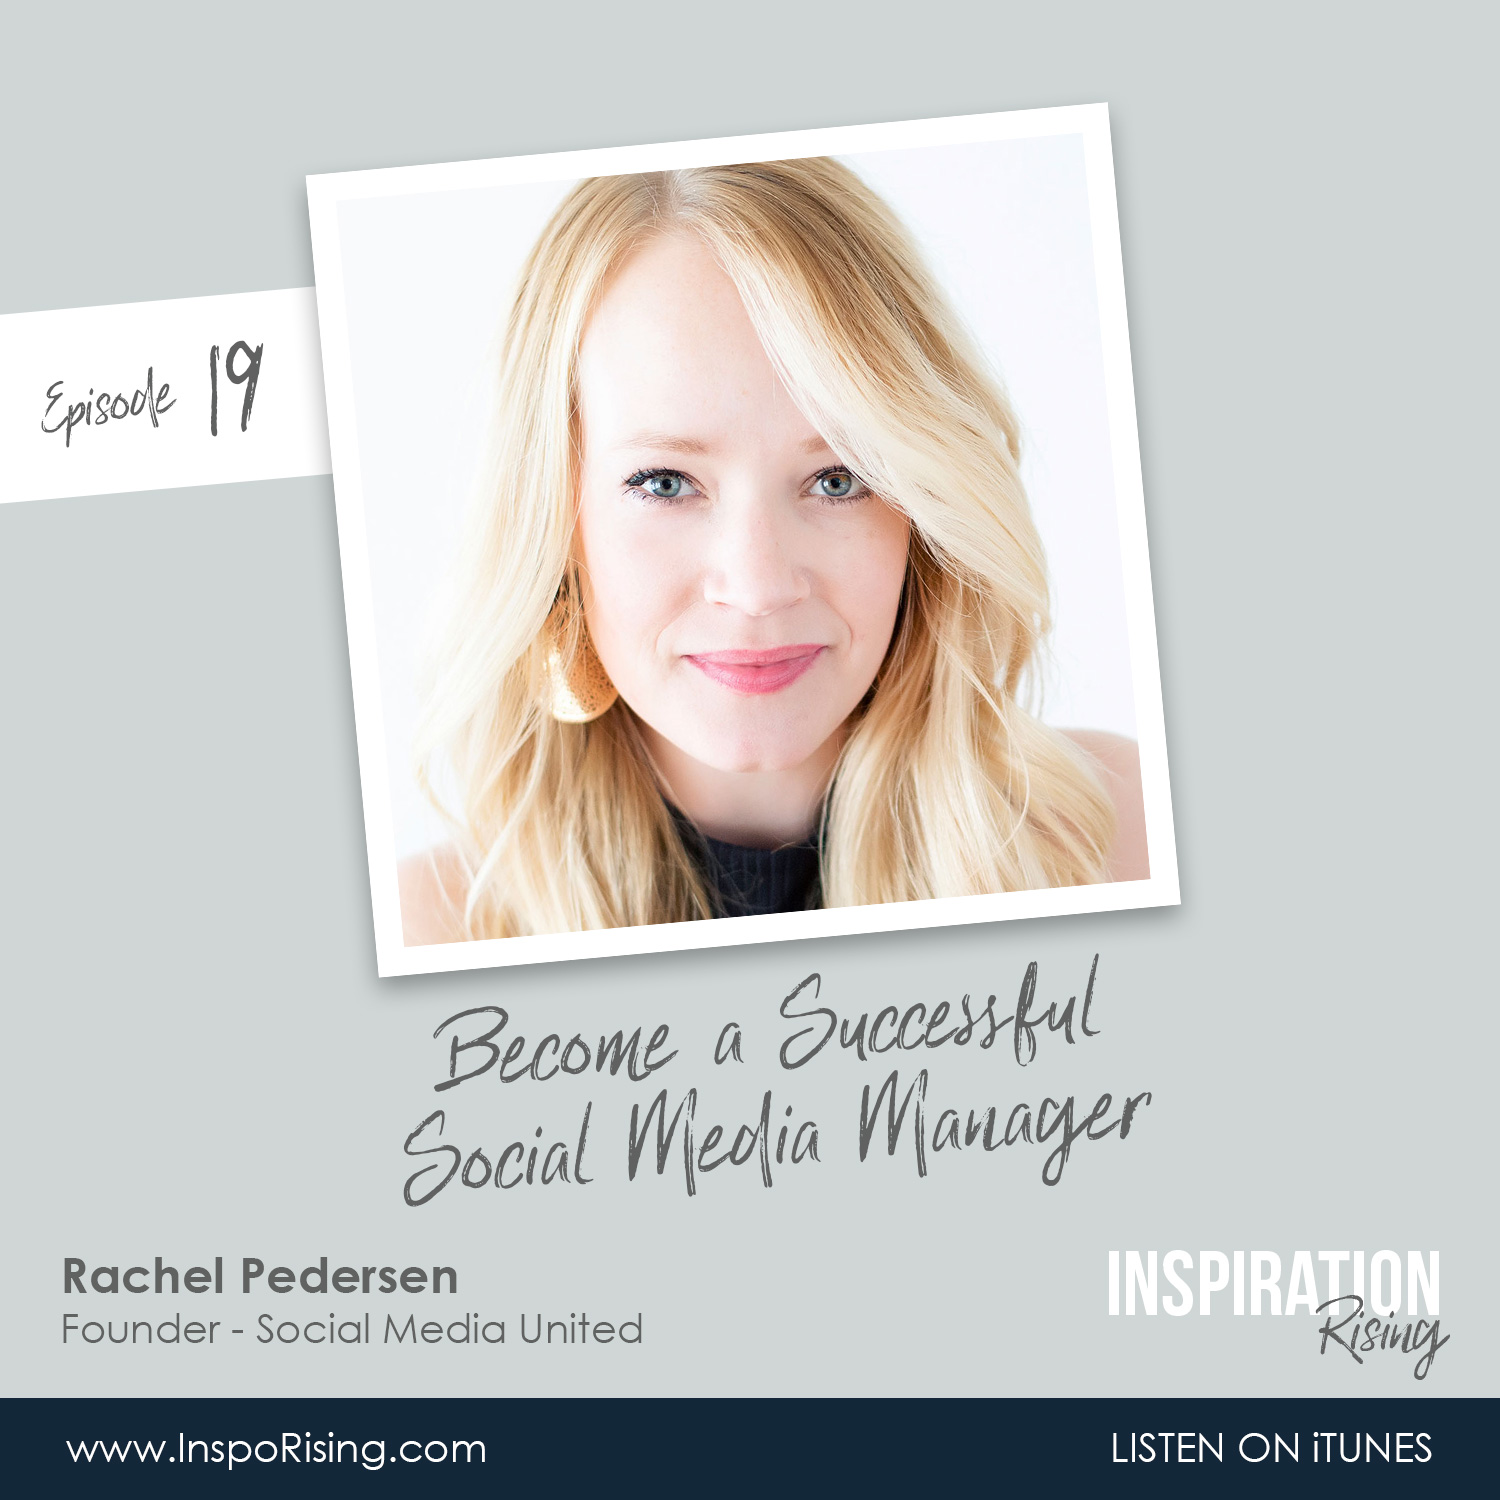 Rachel Pedersen - Social Media United